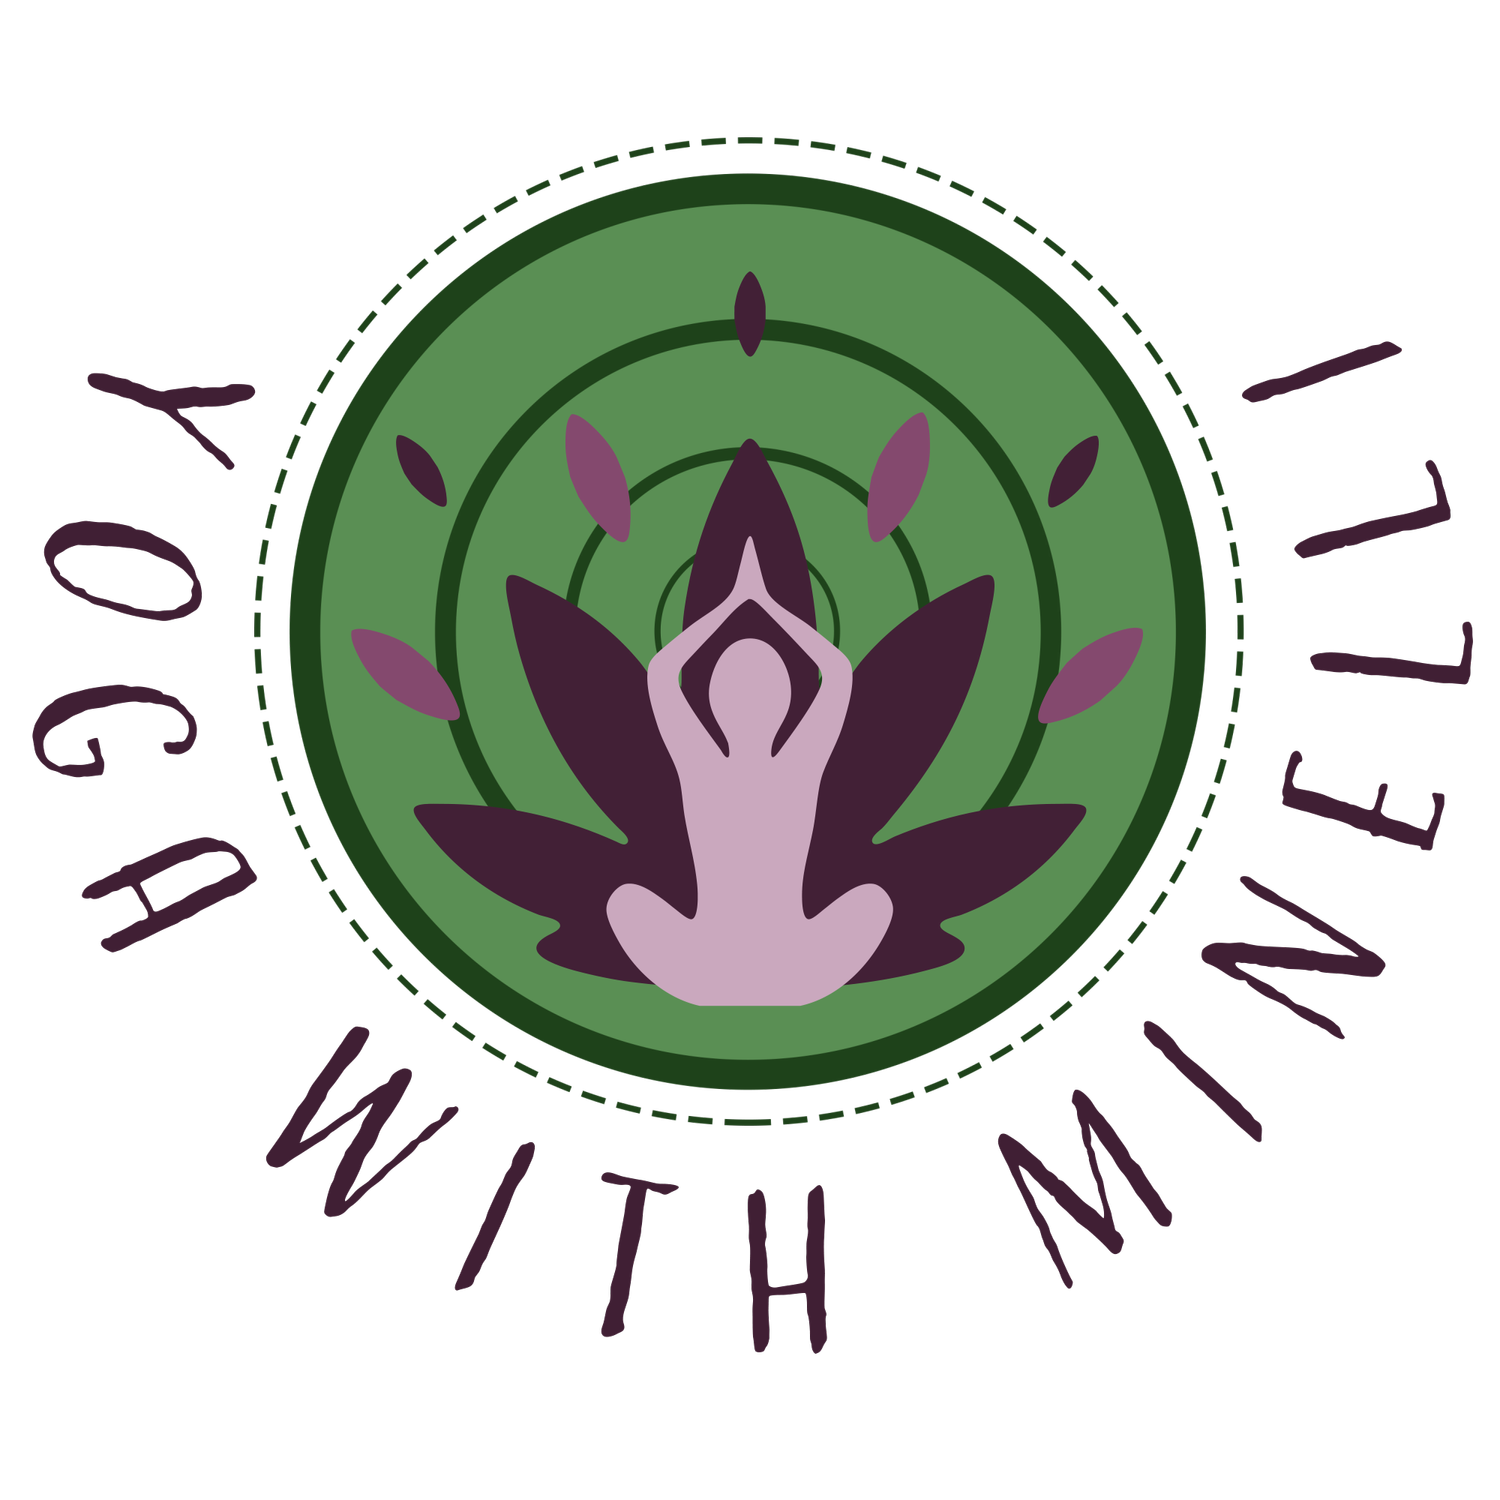 Yoga With Minelli